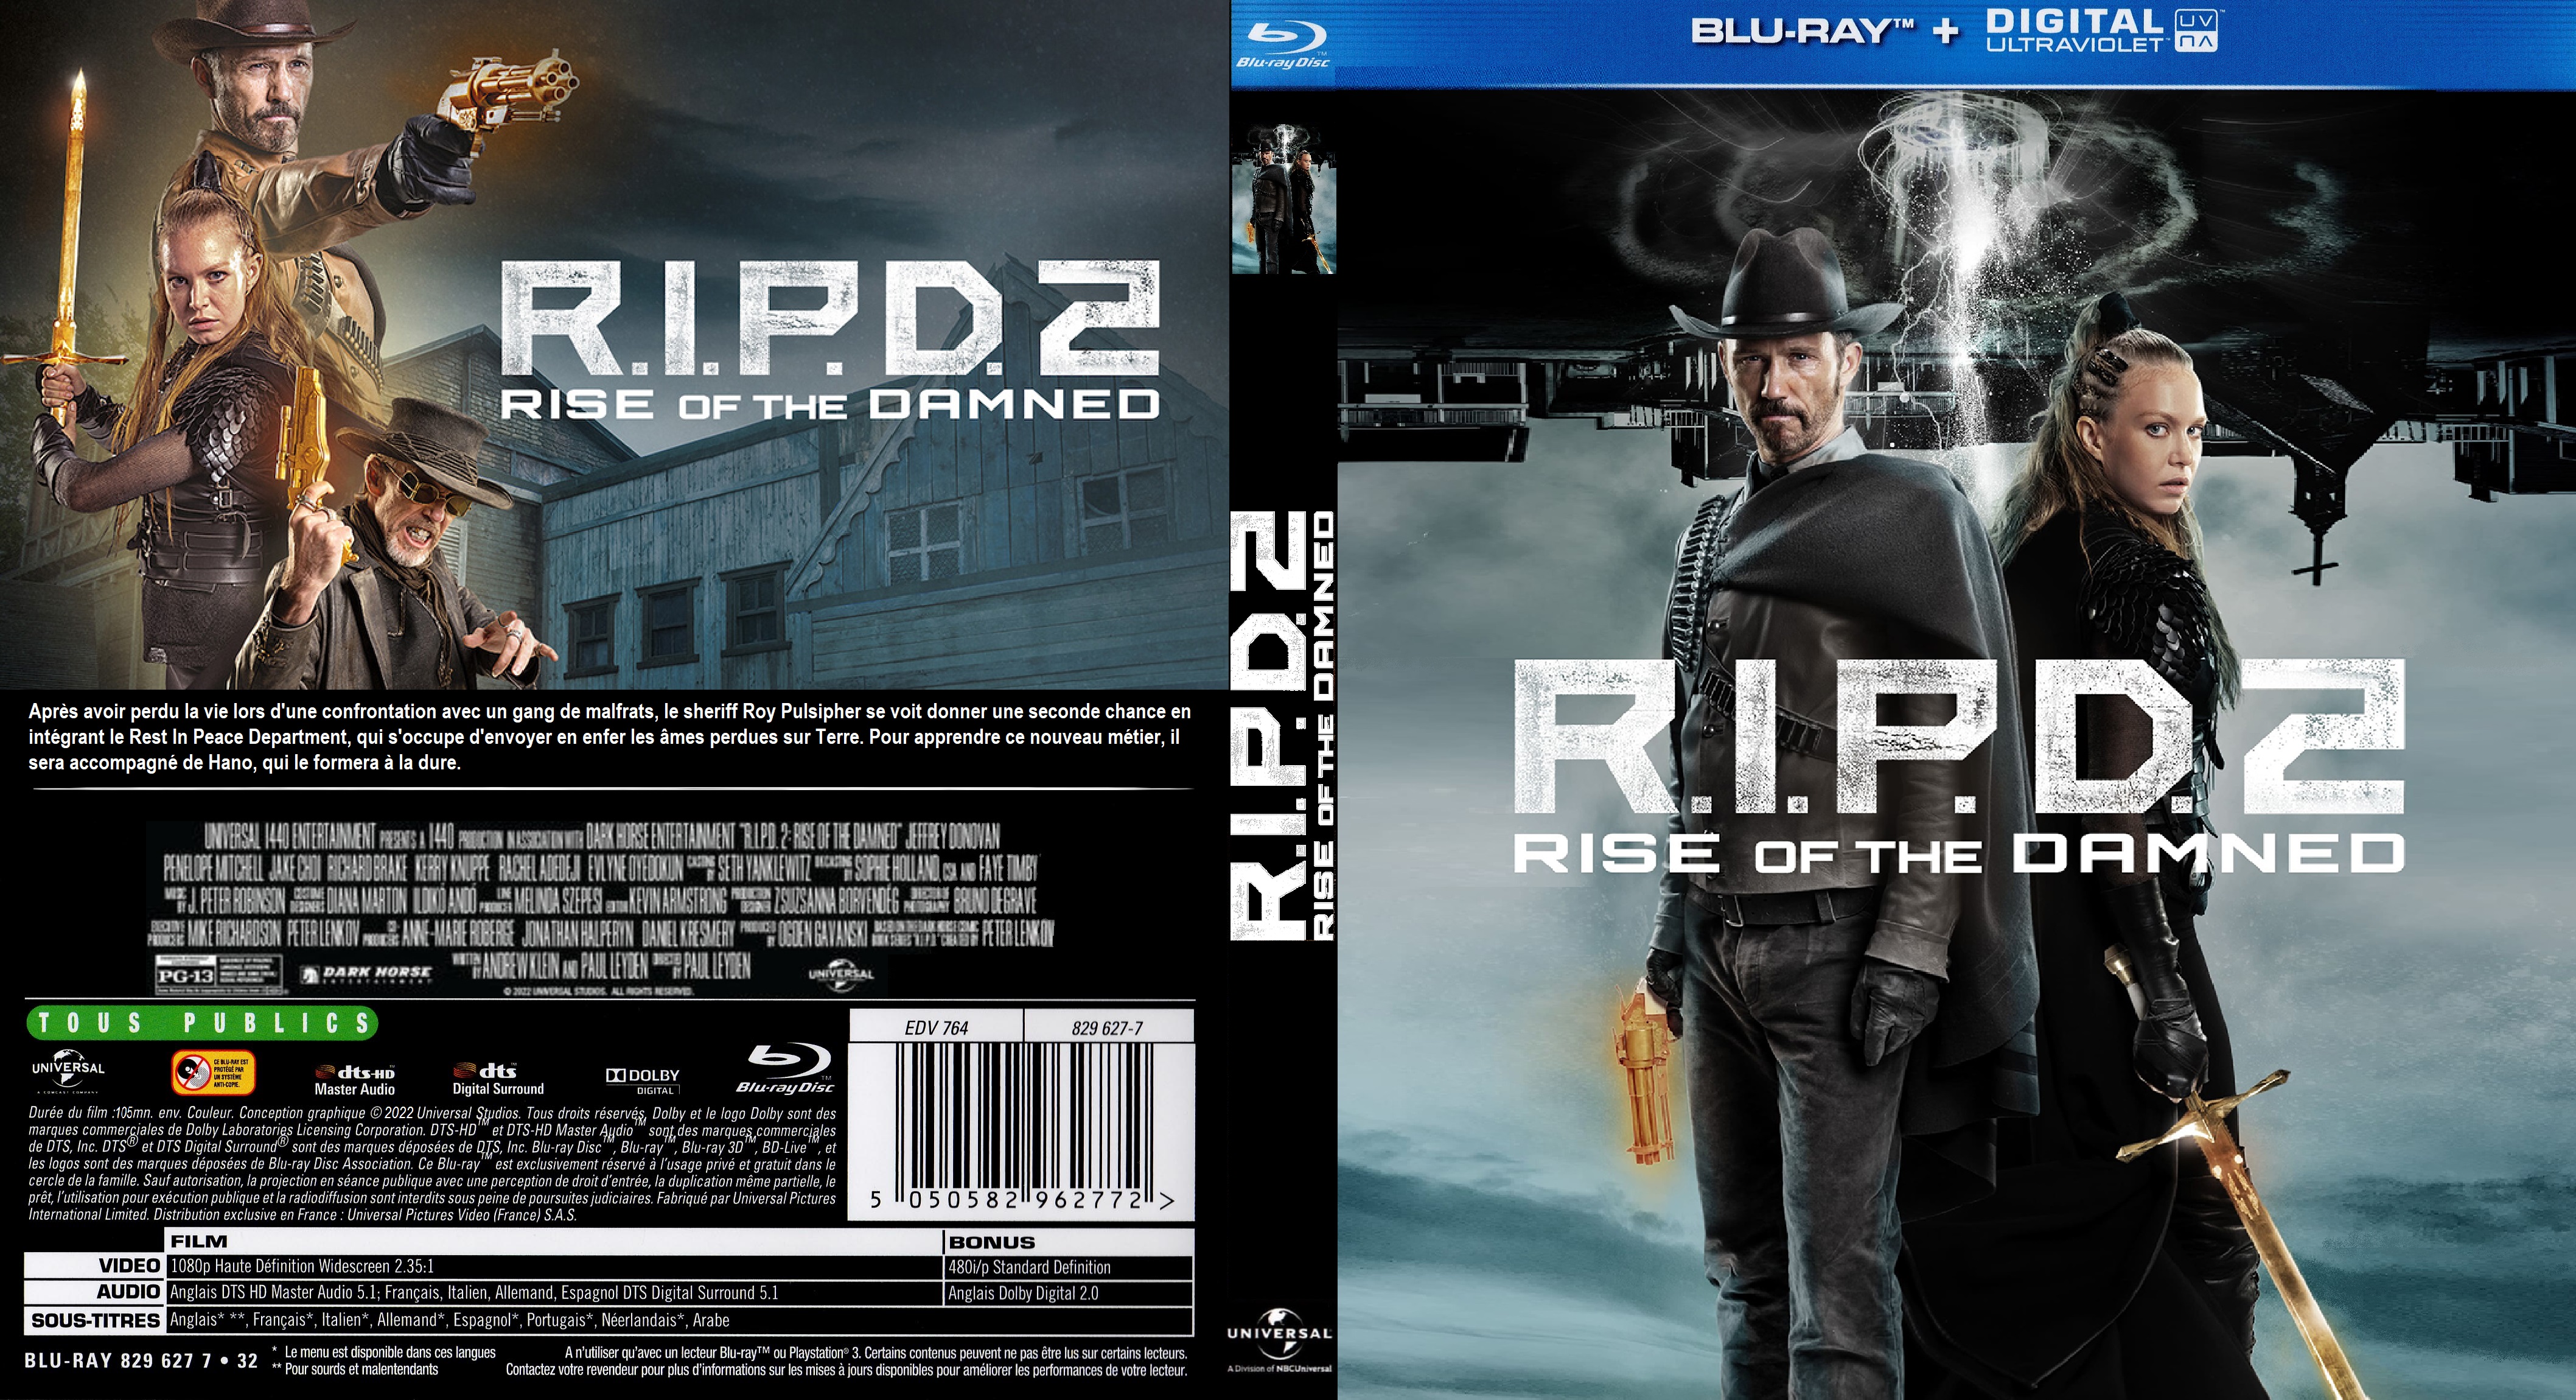 Jaquette DVD RIPD2 BLU RAY custom